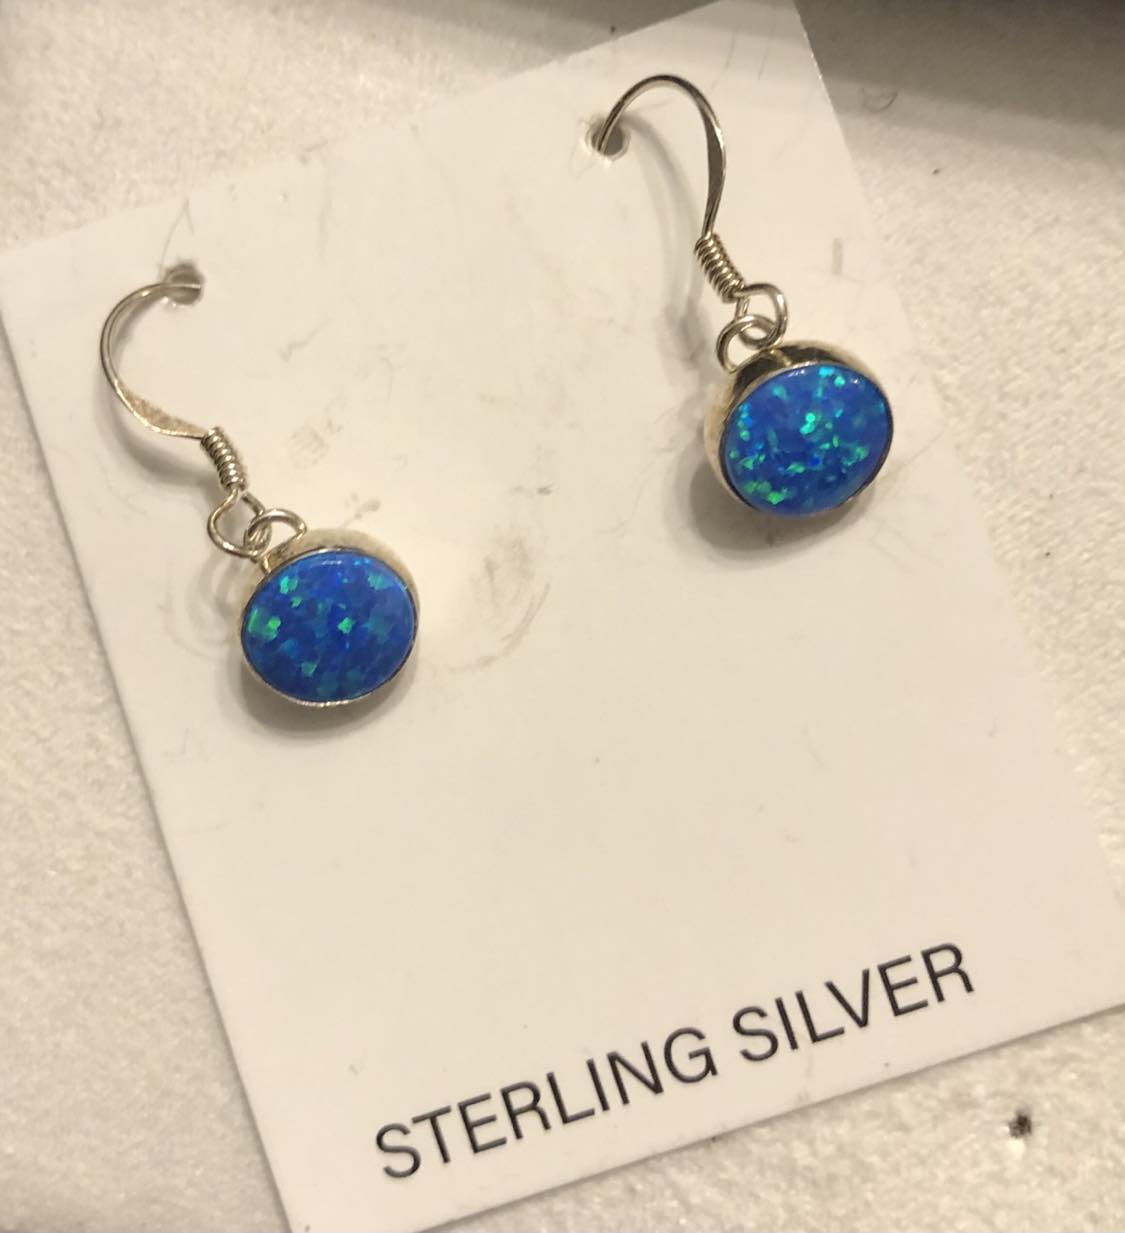 Blue Opal and Silver earrings.